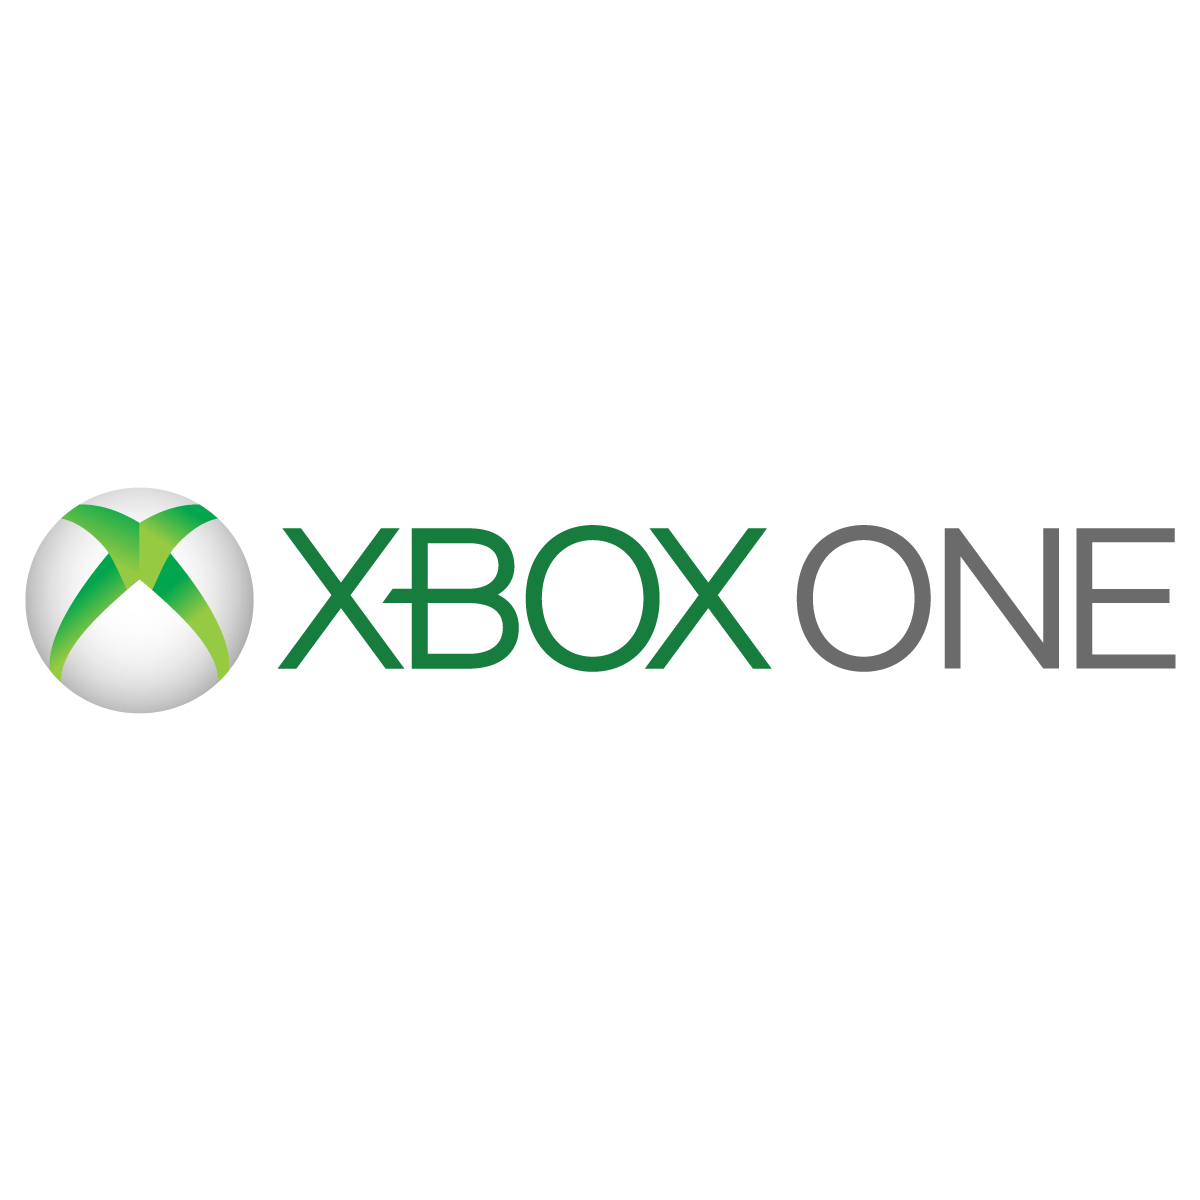 Xbone Logo - Xbox One Logo Vector 3D | Free Vector Silhouette Graphics AI EPS SVG ...